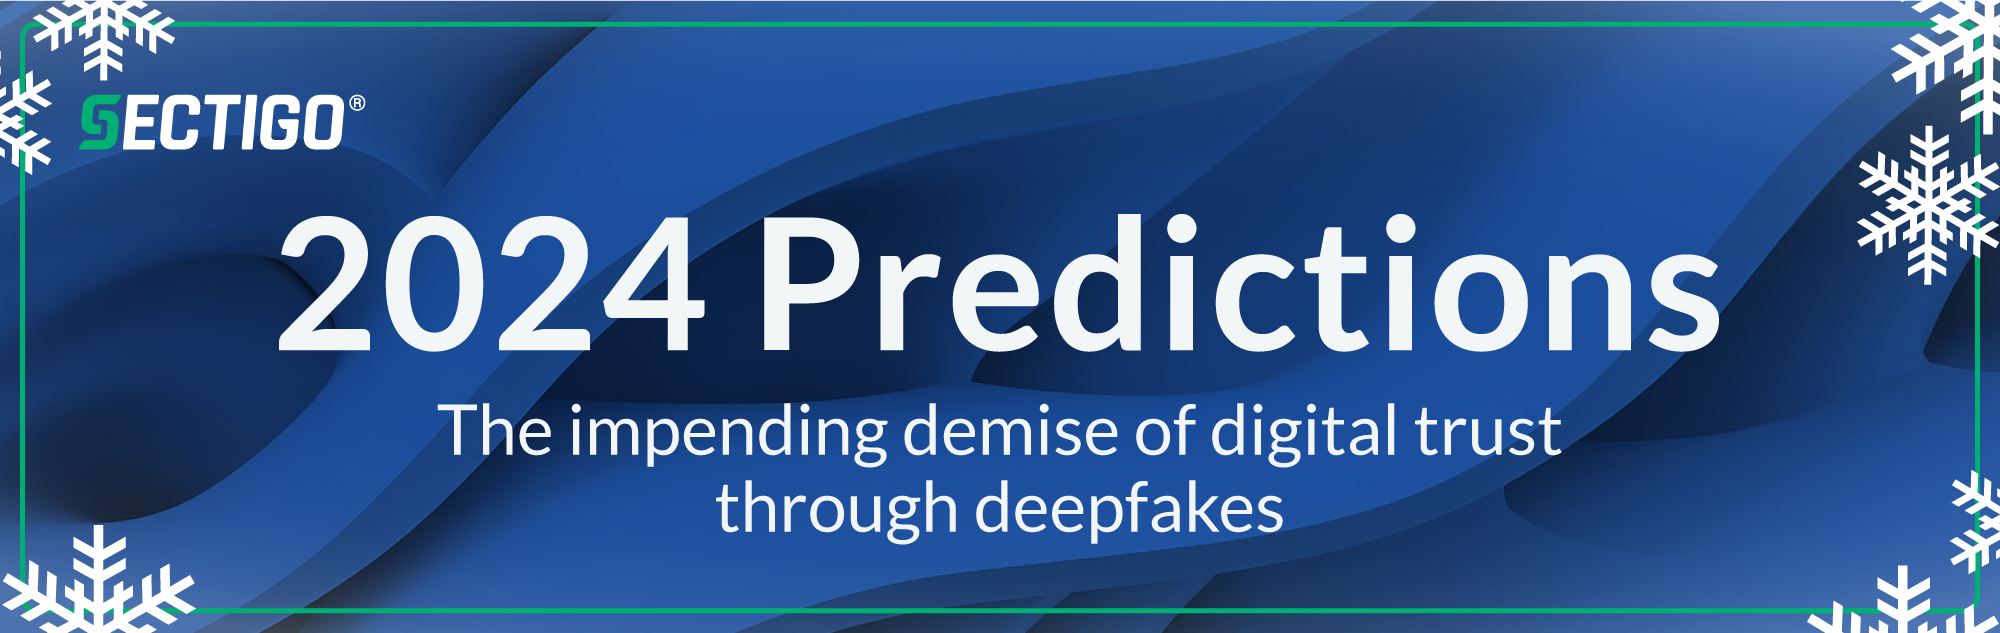 Prediction: deepfakes will undermine digital trust